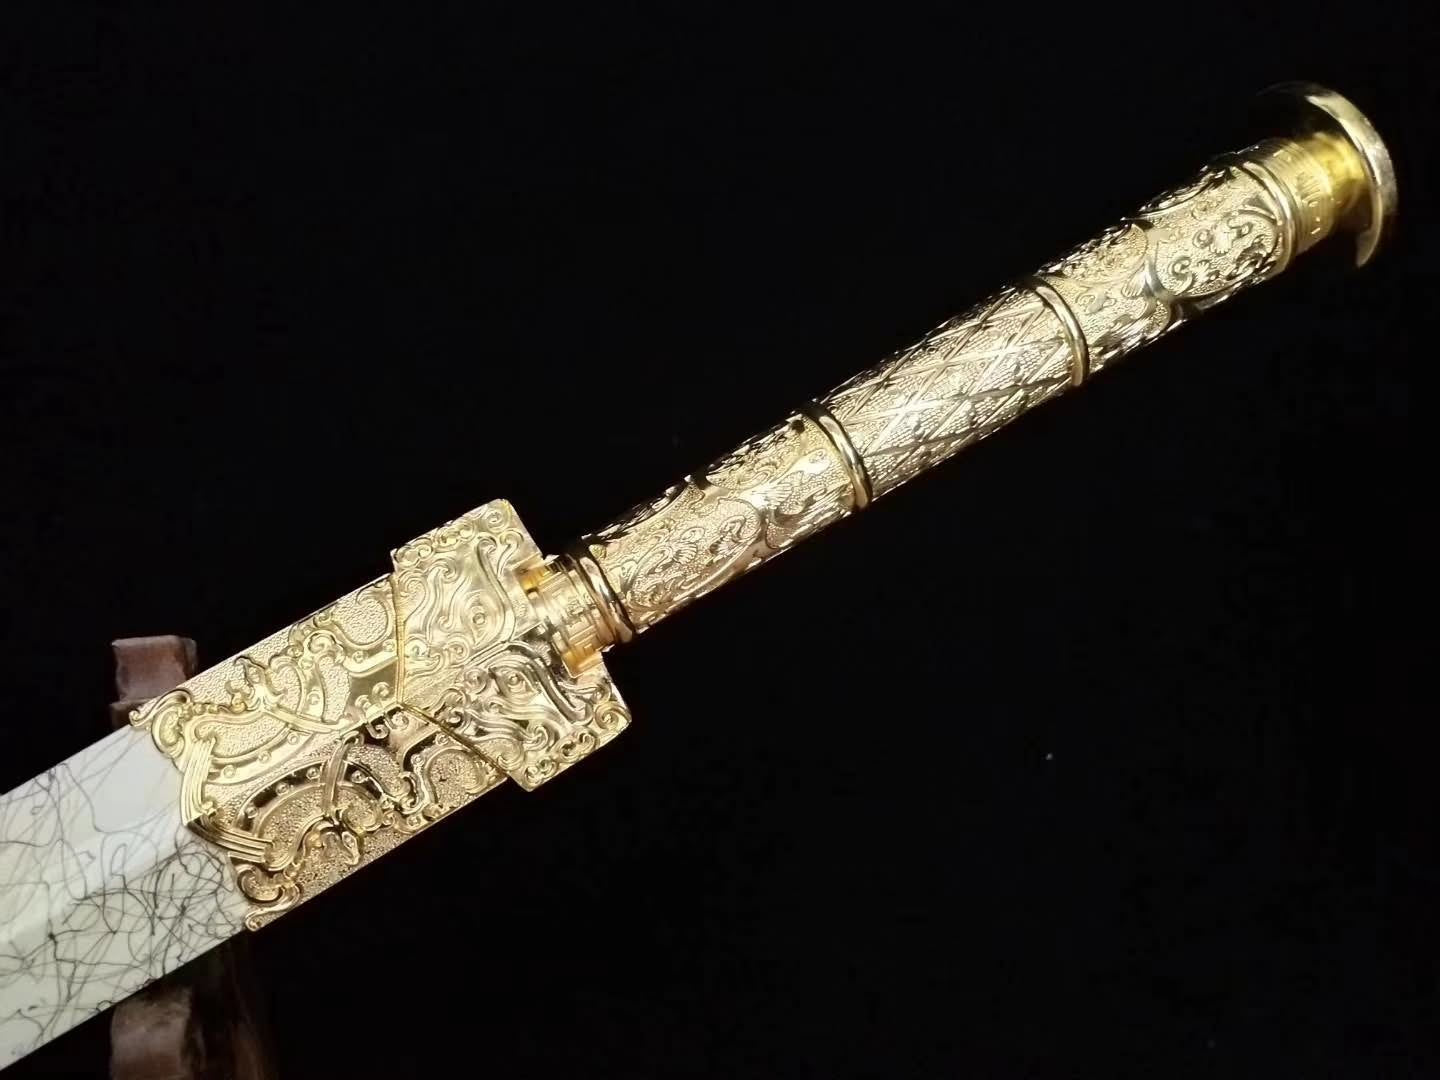 Han jian sword,Medium carbon steel etch blade,Alloy fittings - Chinese sword shop